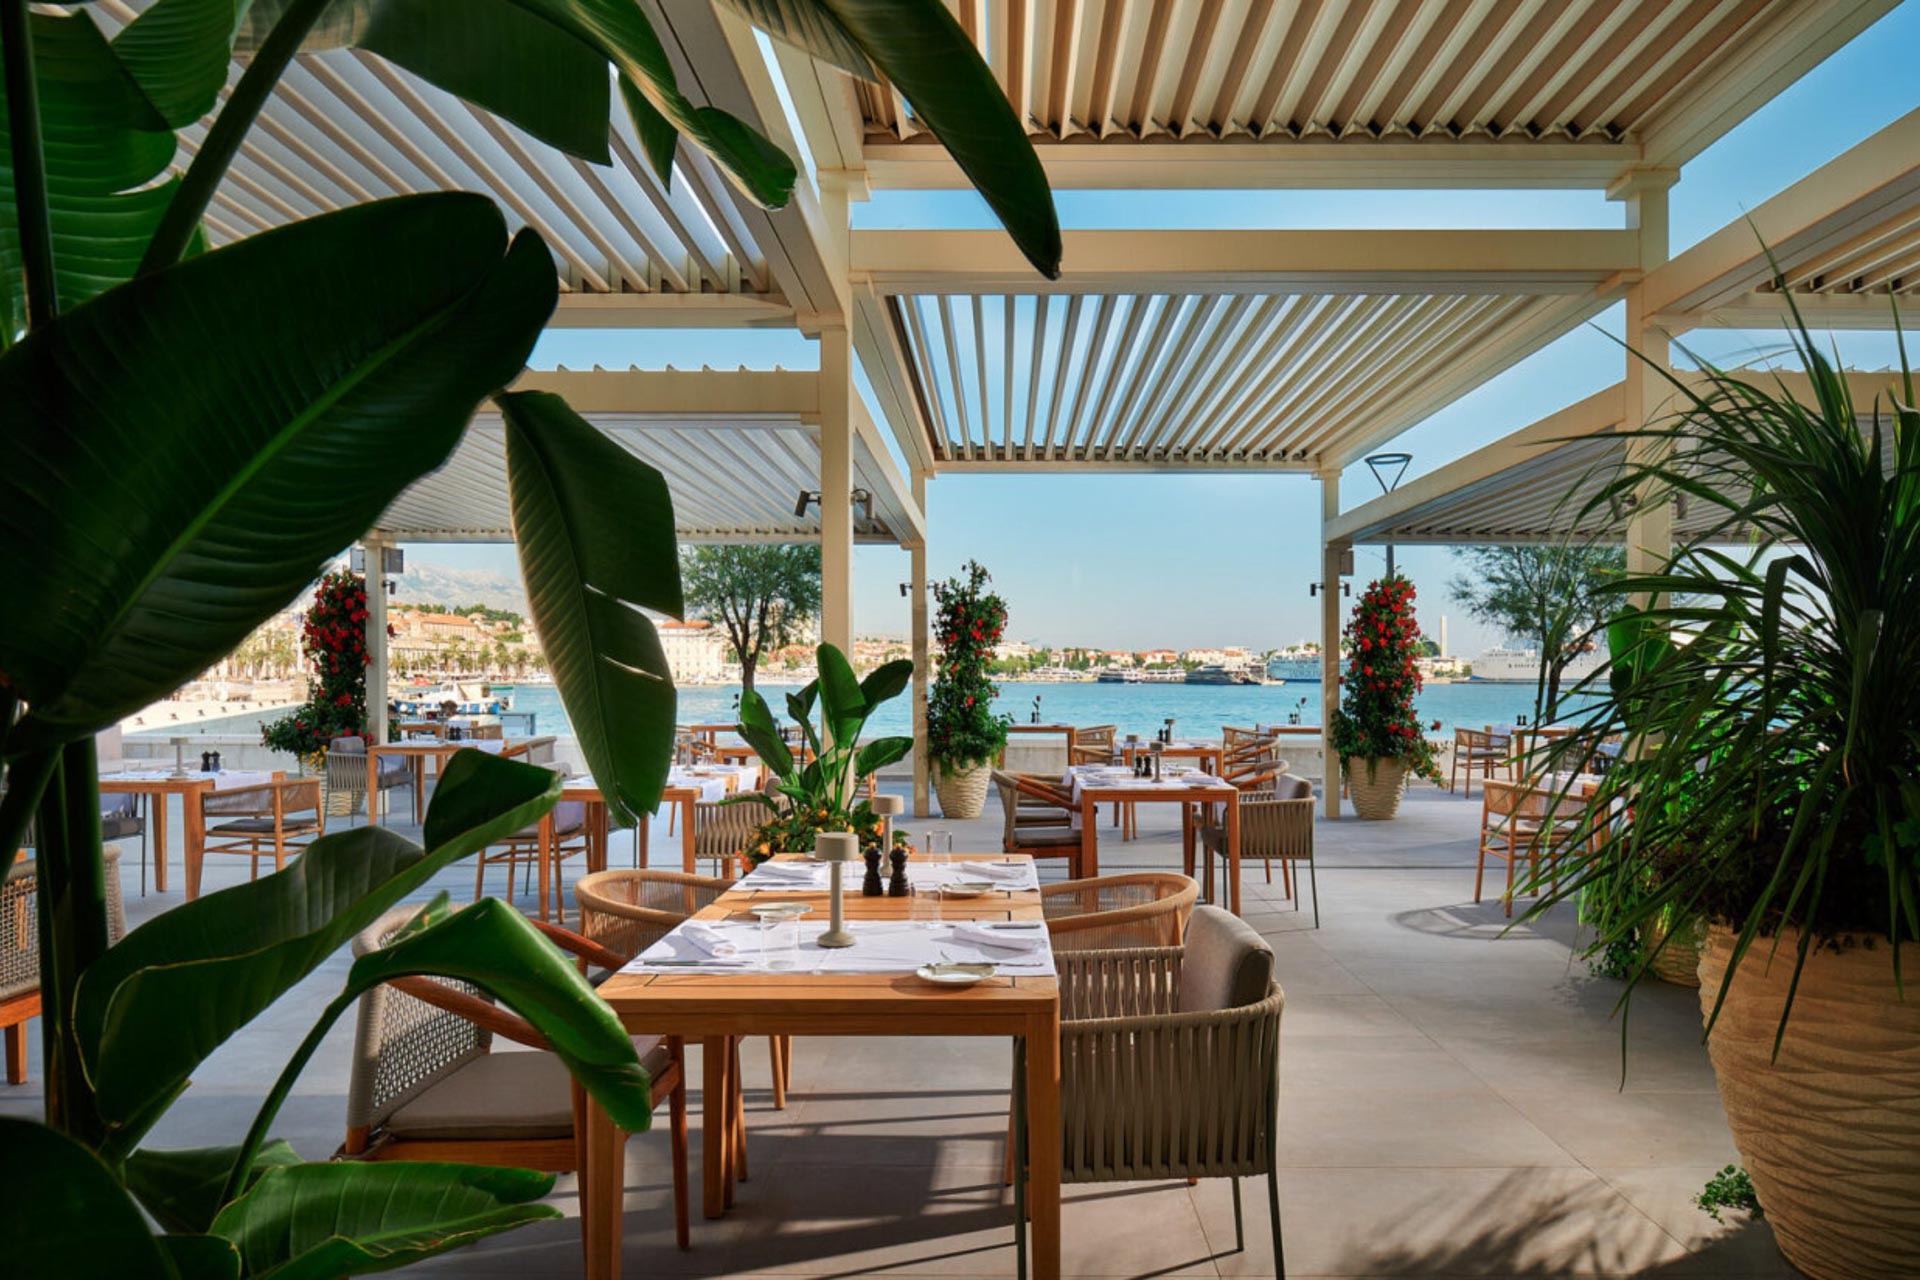 Mediterranee Restaurant Terrace